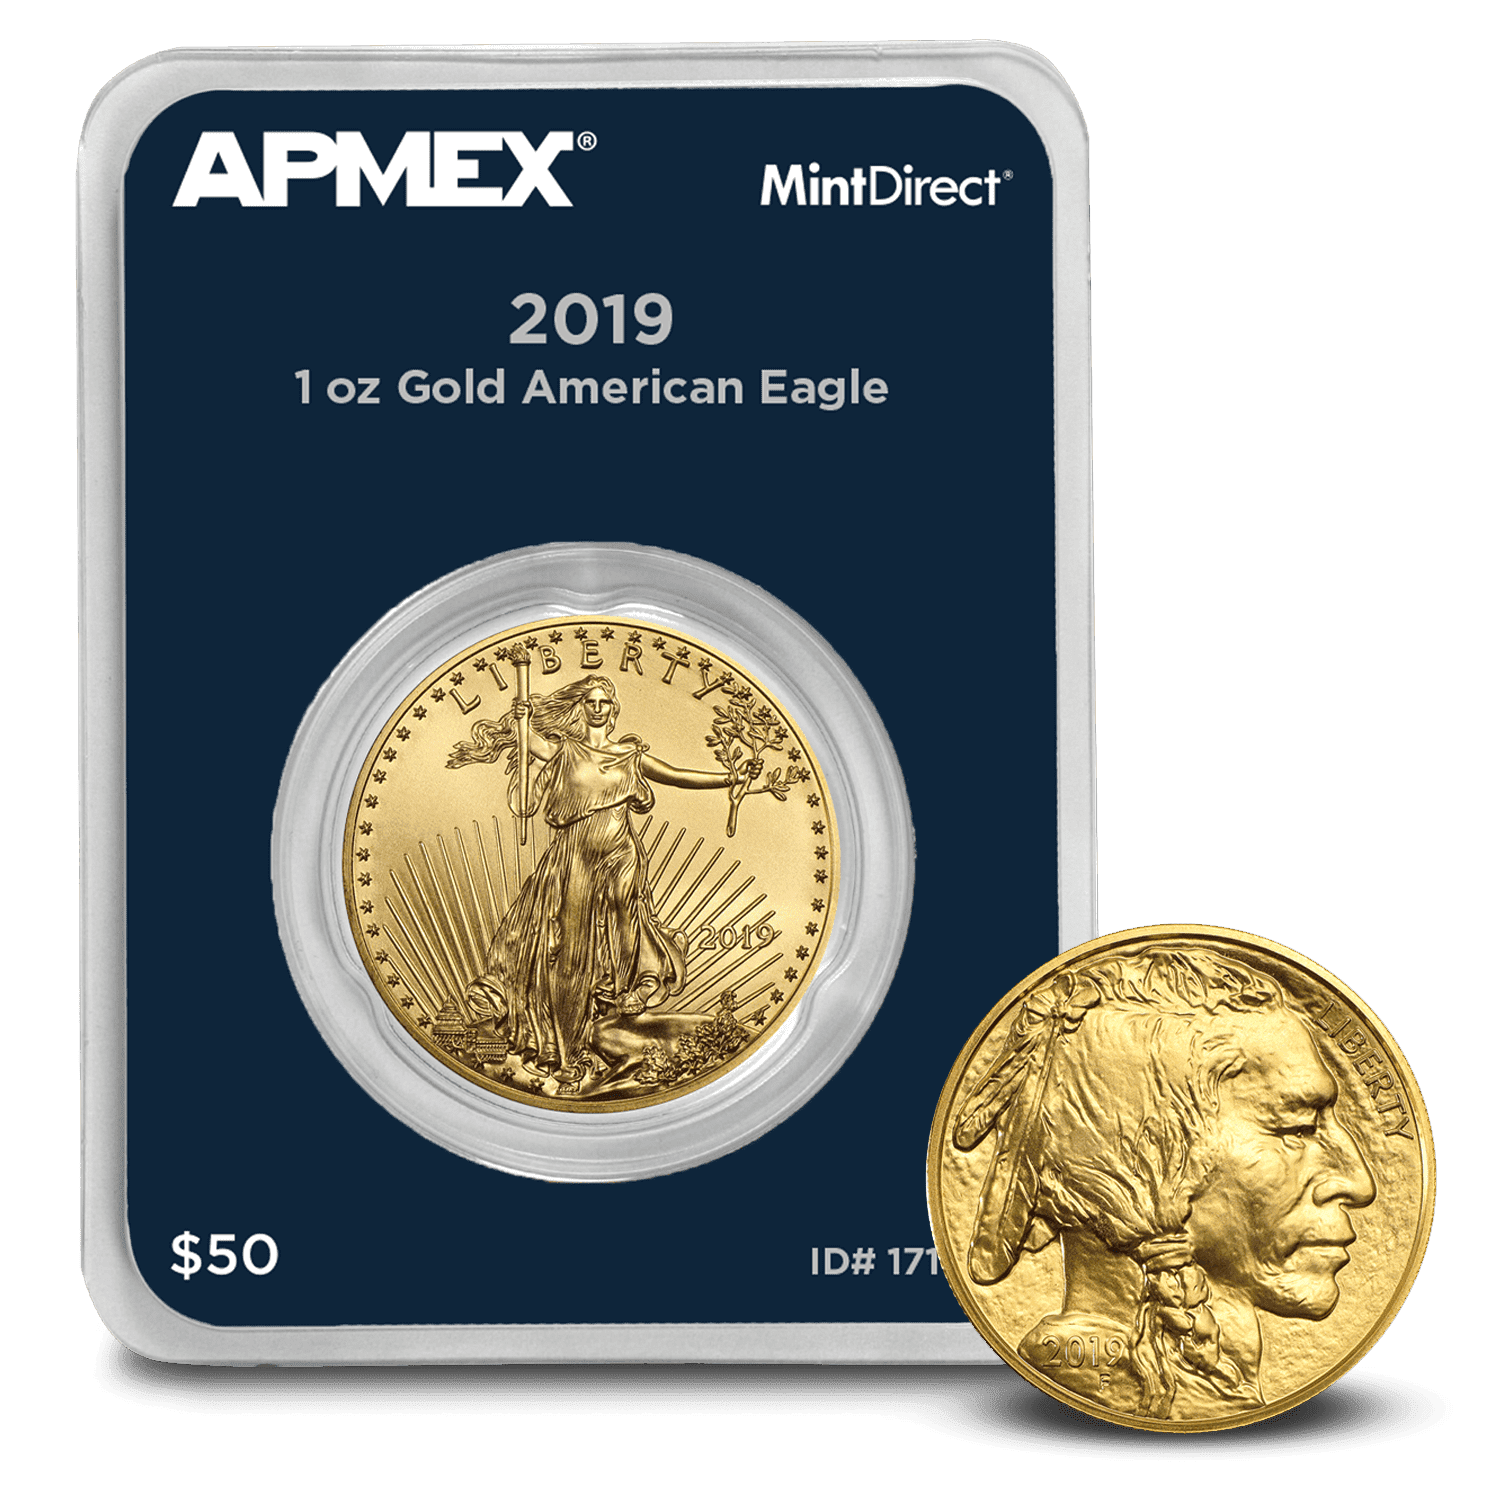 $5 US Commemorative Gold Coins BU/Proof